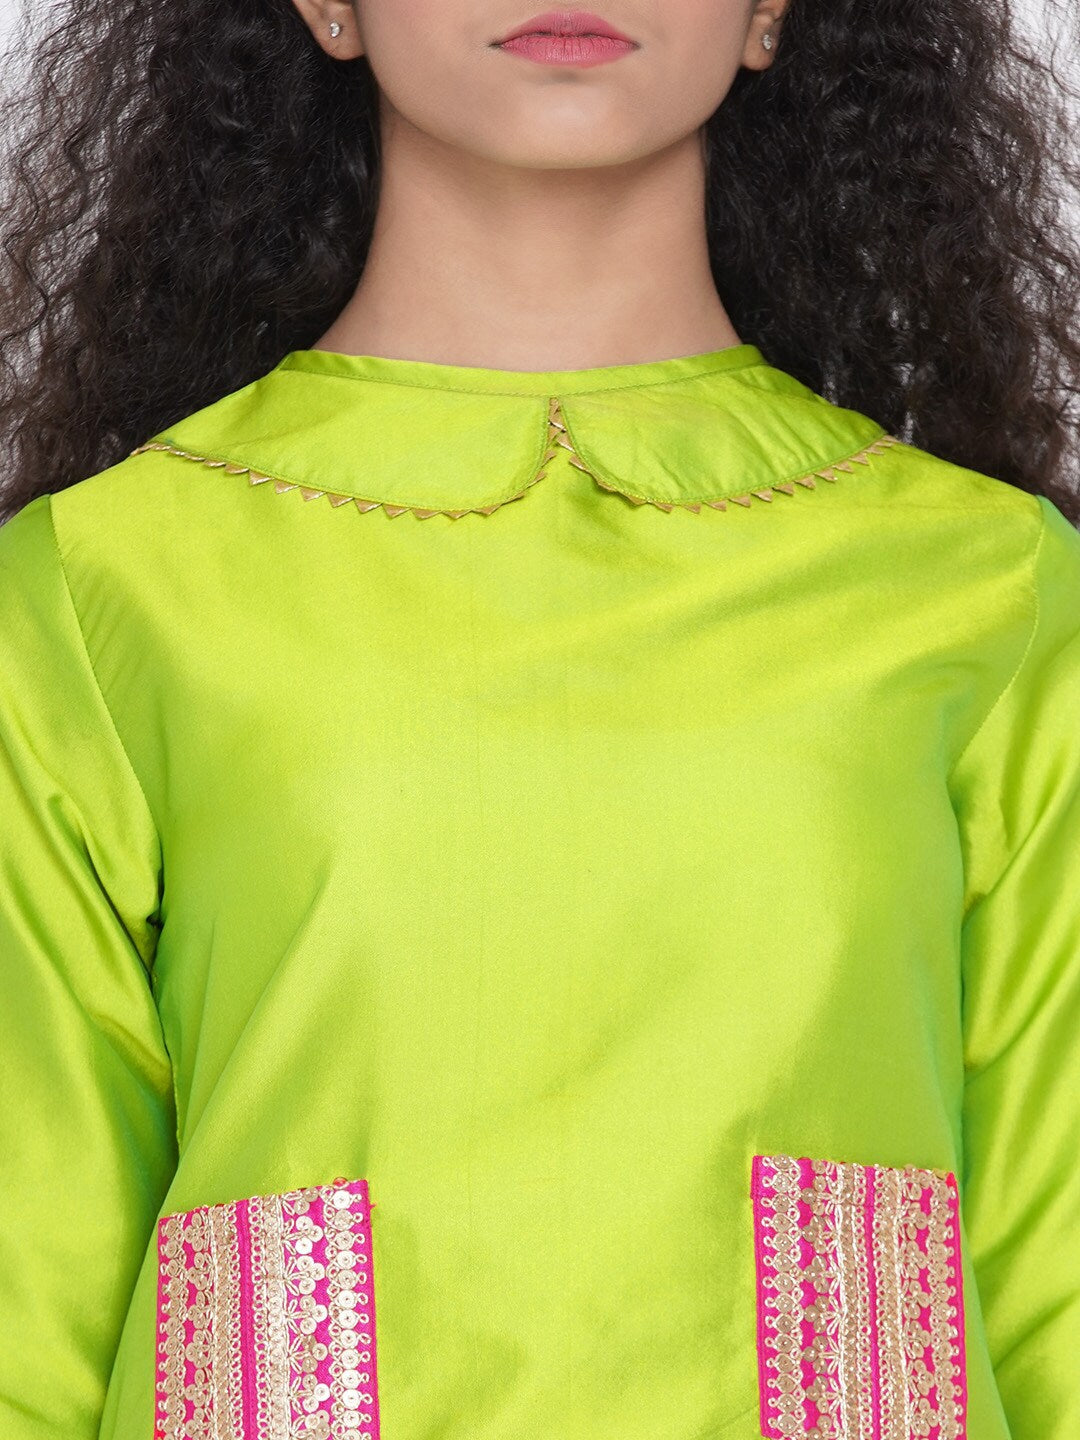 Girl's Green & Pink Embellished Ready to Wear Lehenga Choli - NOZ2TOZ KIDS